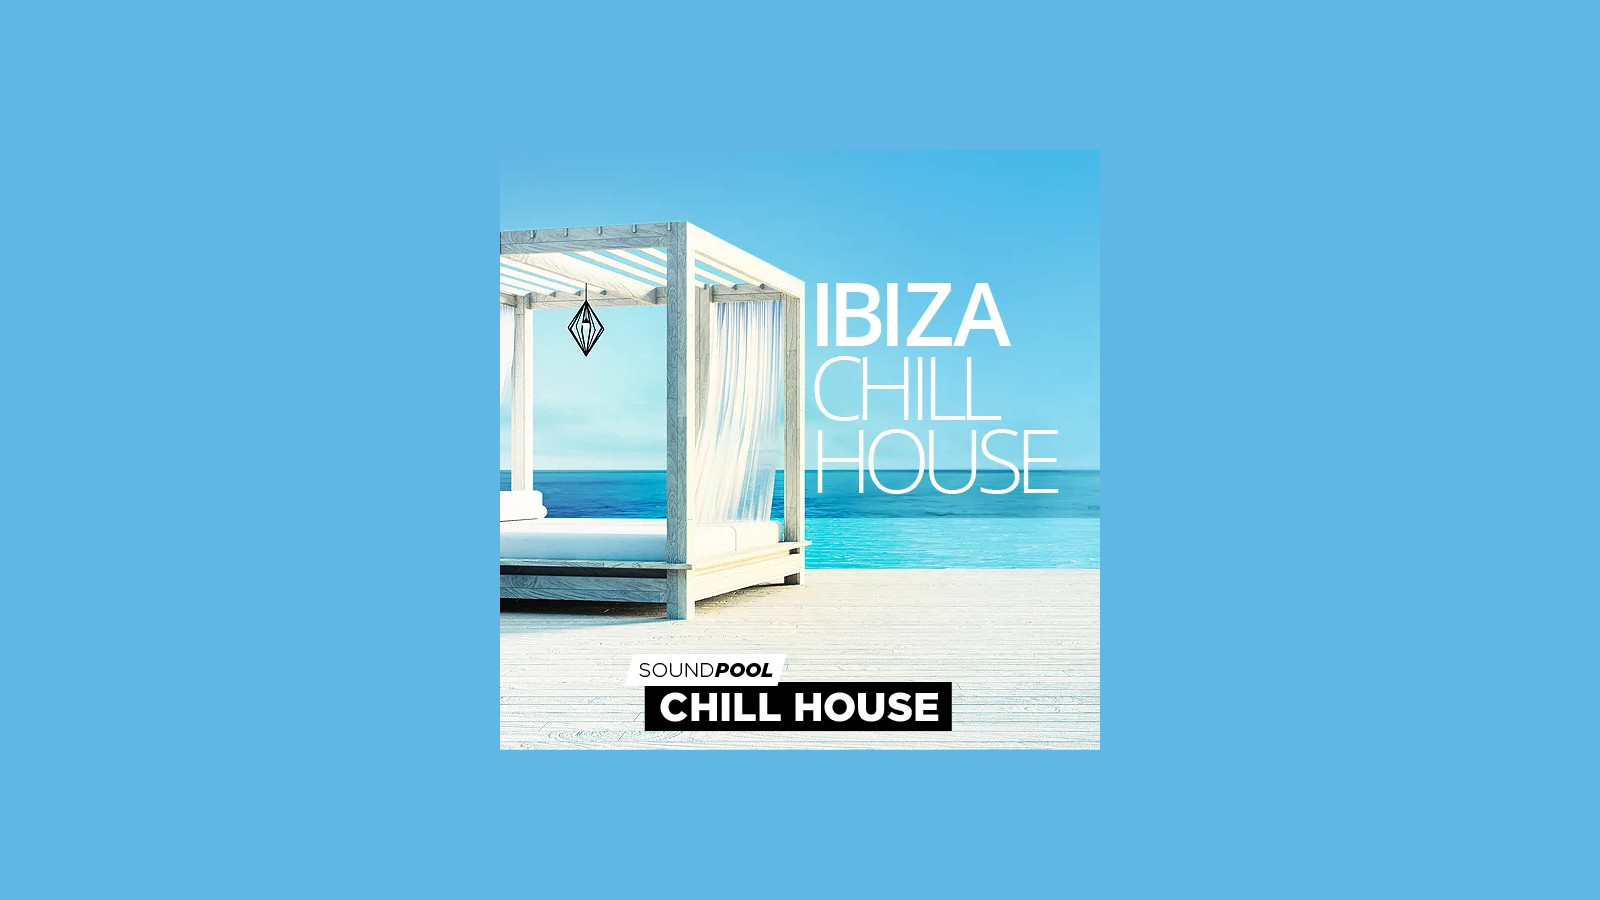 MAGIX Soundpool Ibiza Chill House ProducerPlanet CD Key USD 5.65